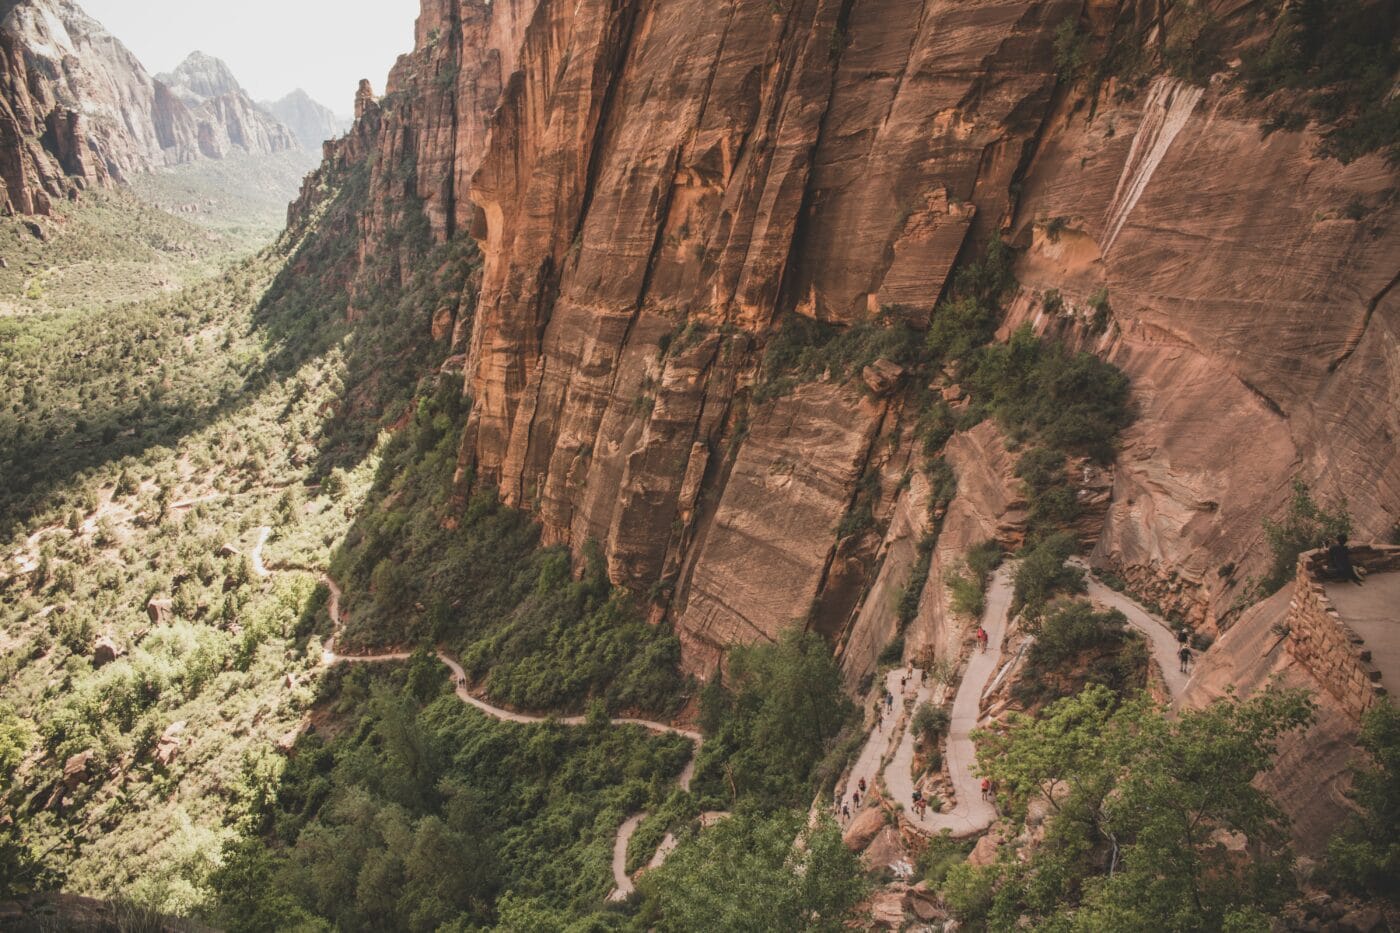 A trail switchbacks along a tall canyon wall